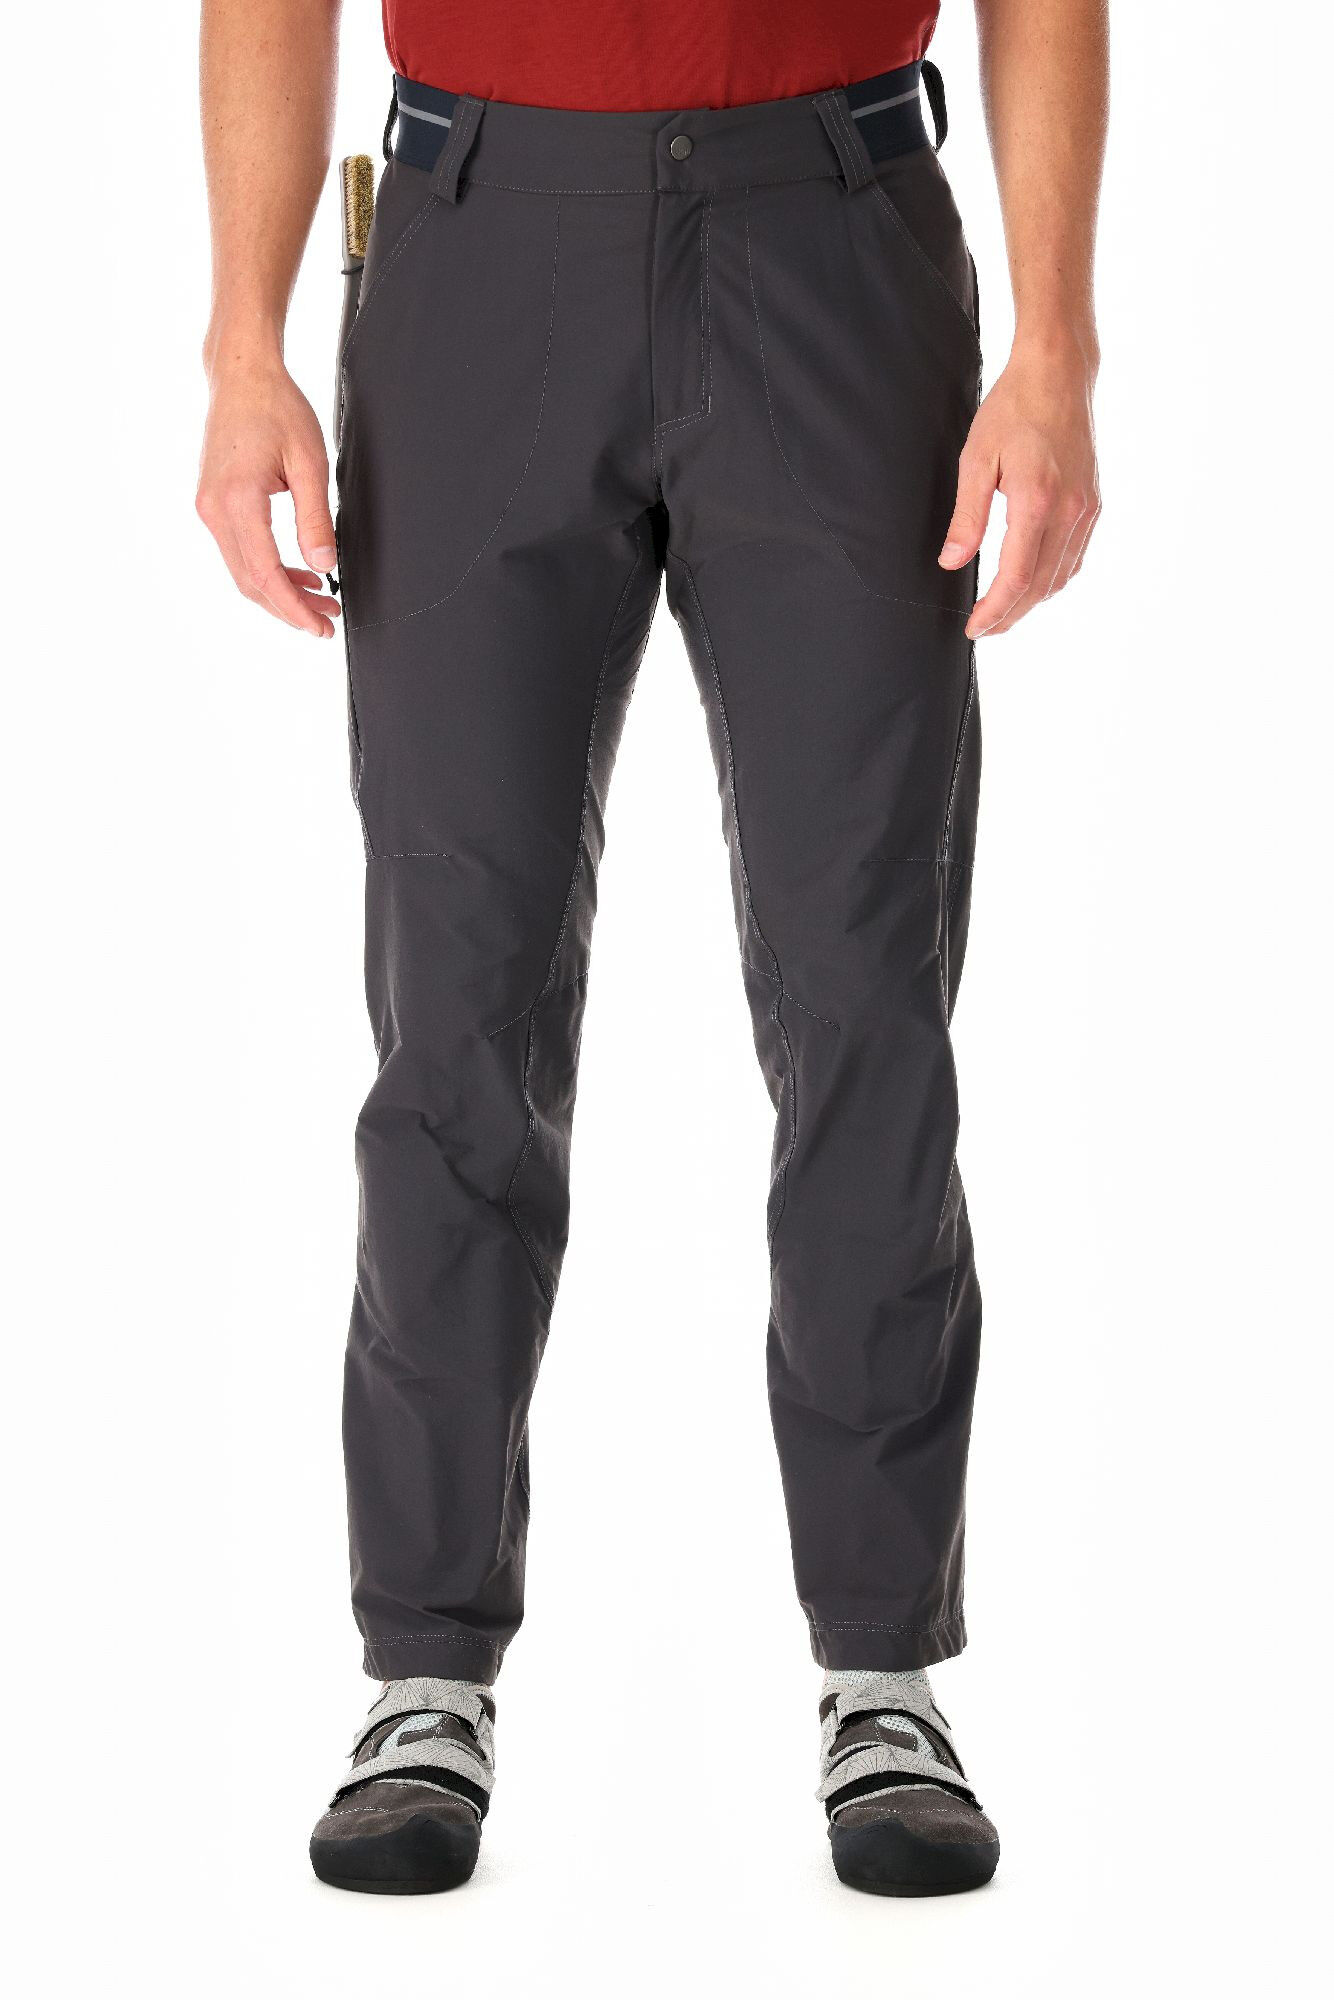 Rab Venant Pants - Climbing trousers - Men's | Hardloop